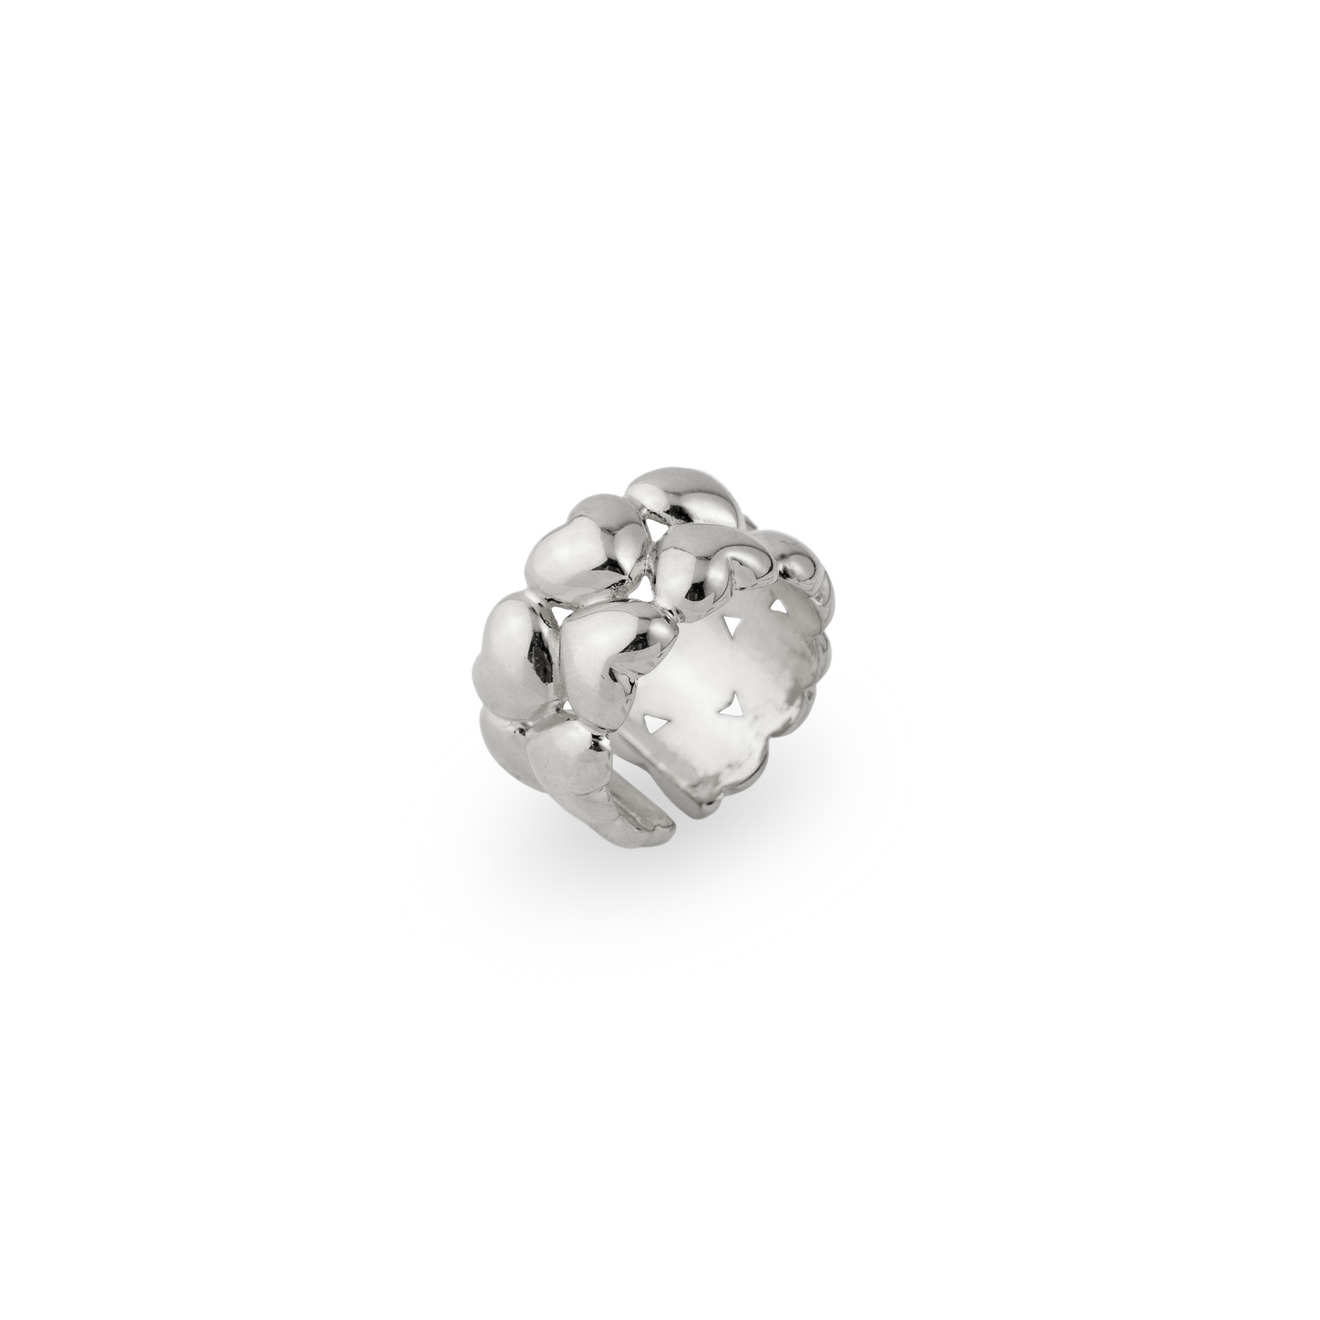 lisa smith незамкнутое серебристое кольцо волна Aloud Незамкнутое серебристое кольцо из сердечек